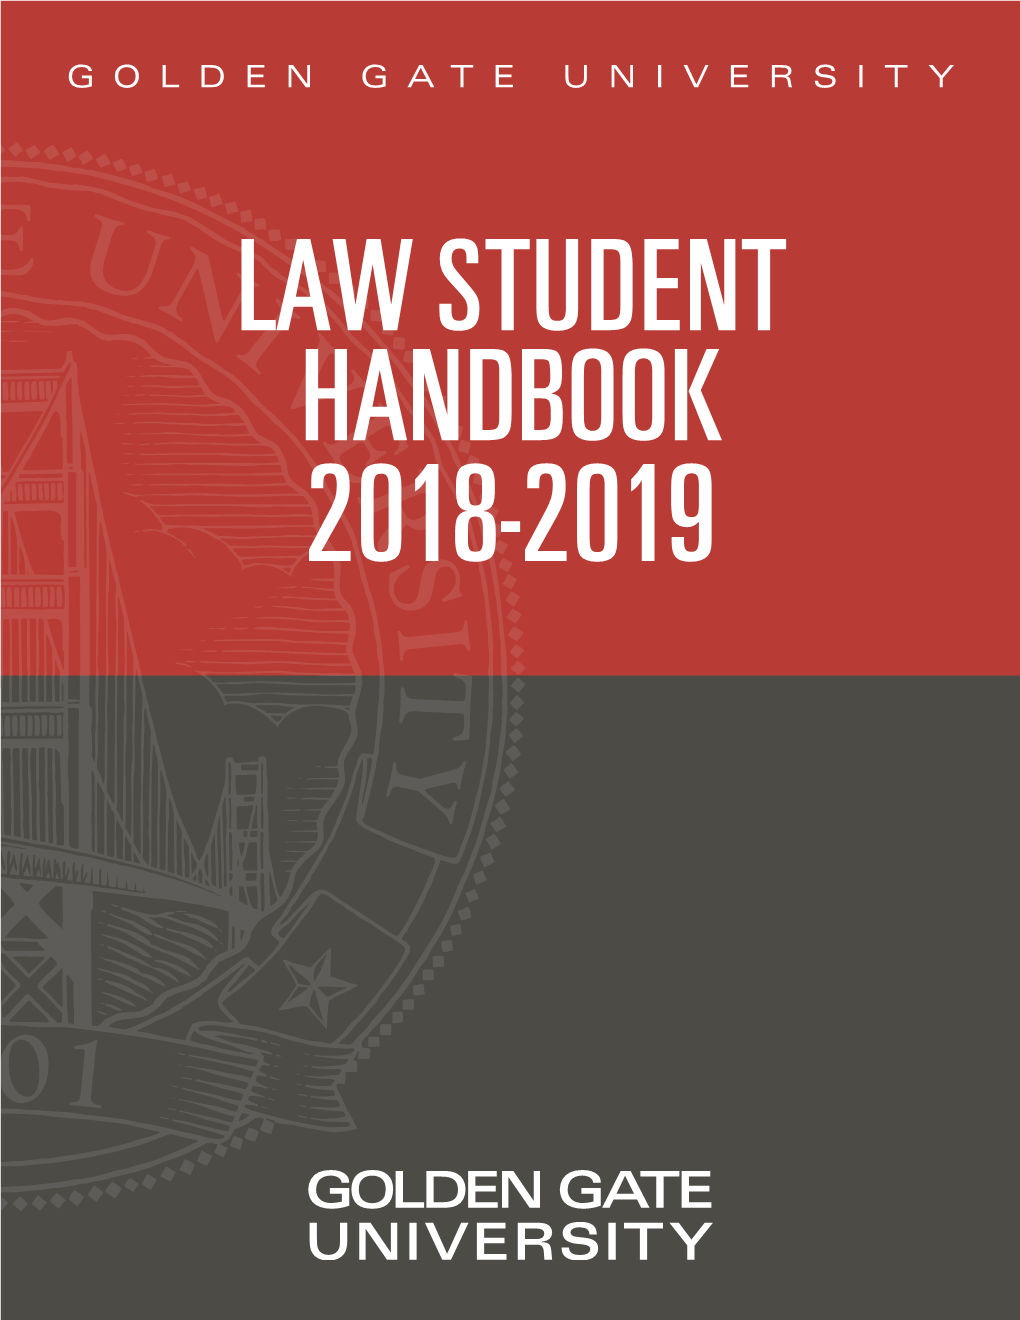 Golden Gate University Law Student Handbook 2018-2019